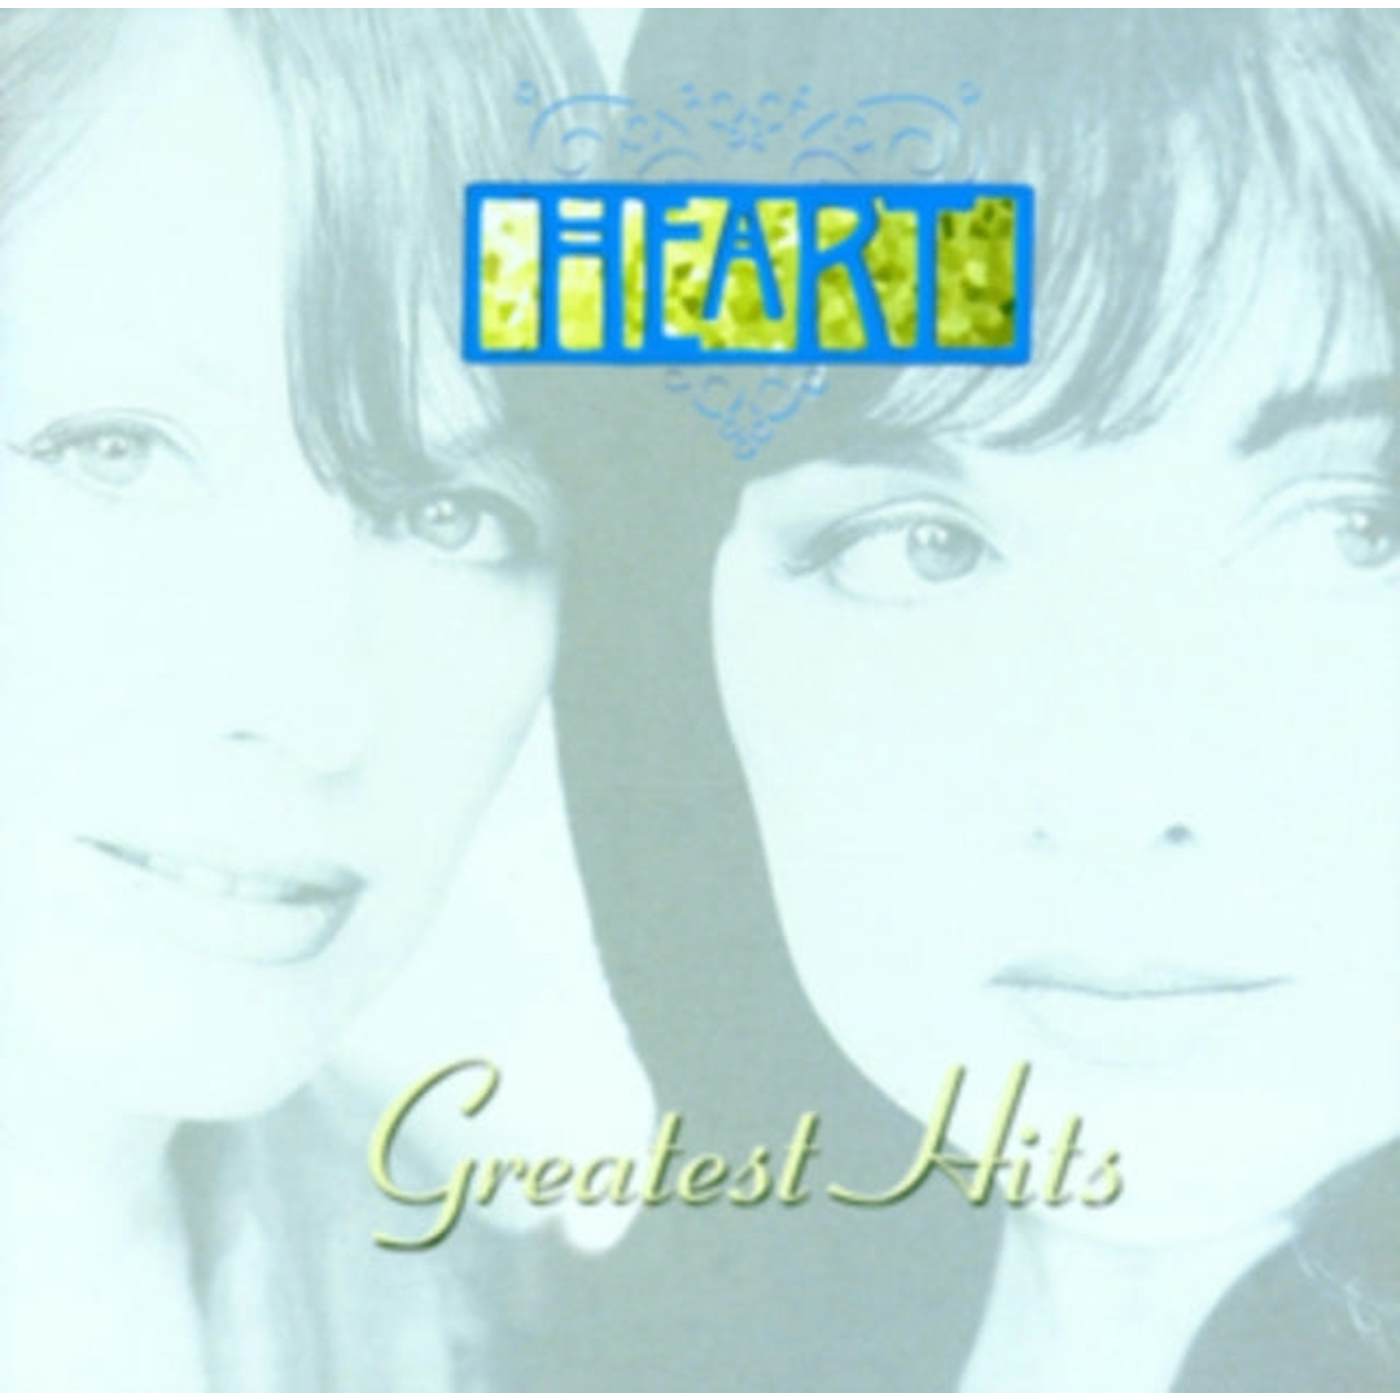 Heart CD - Greatest Hits